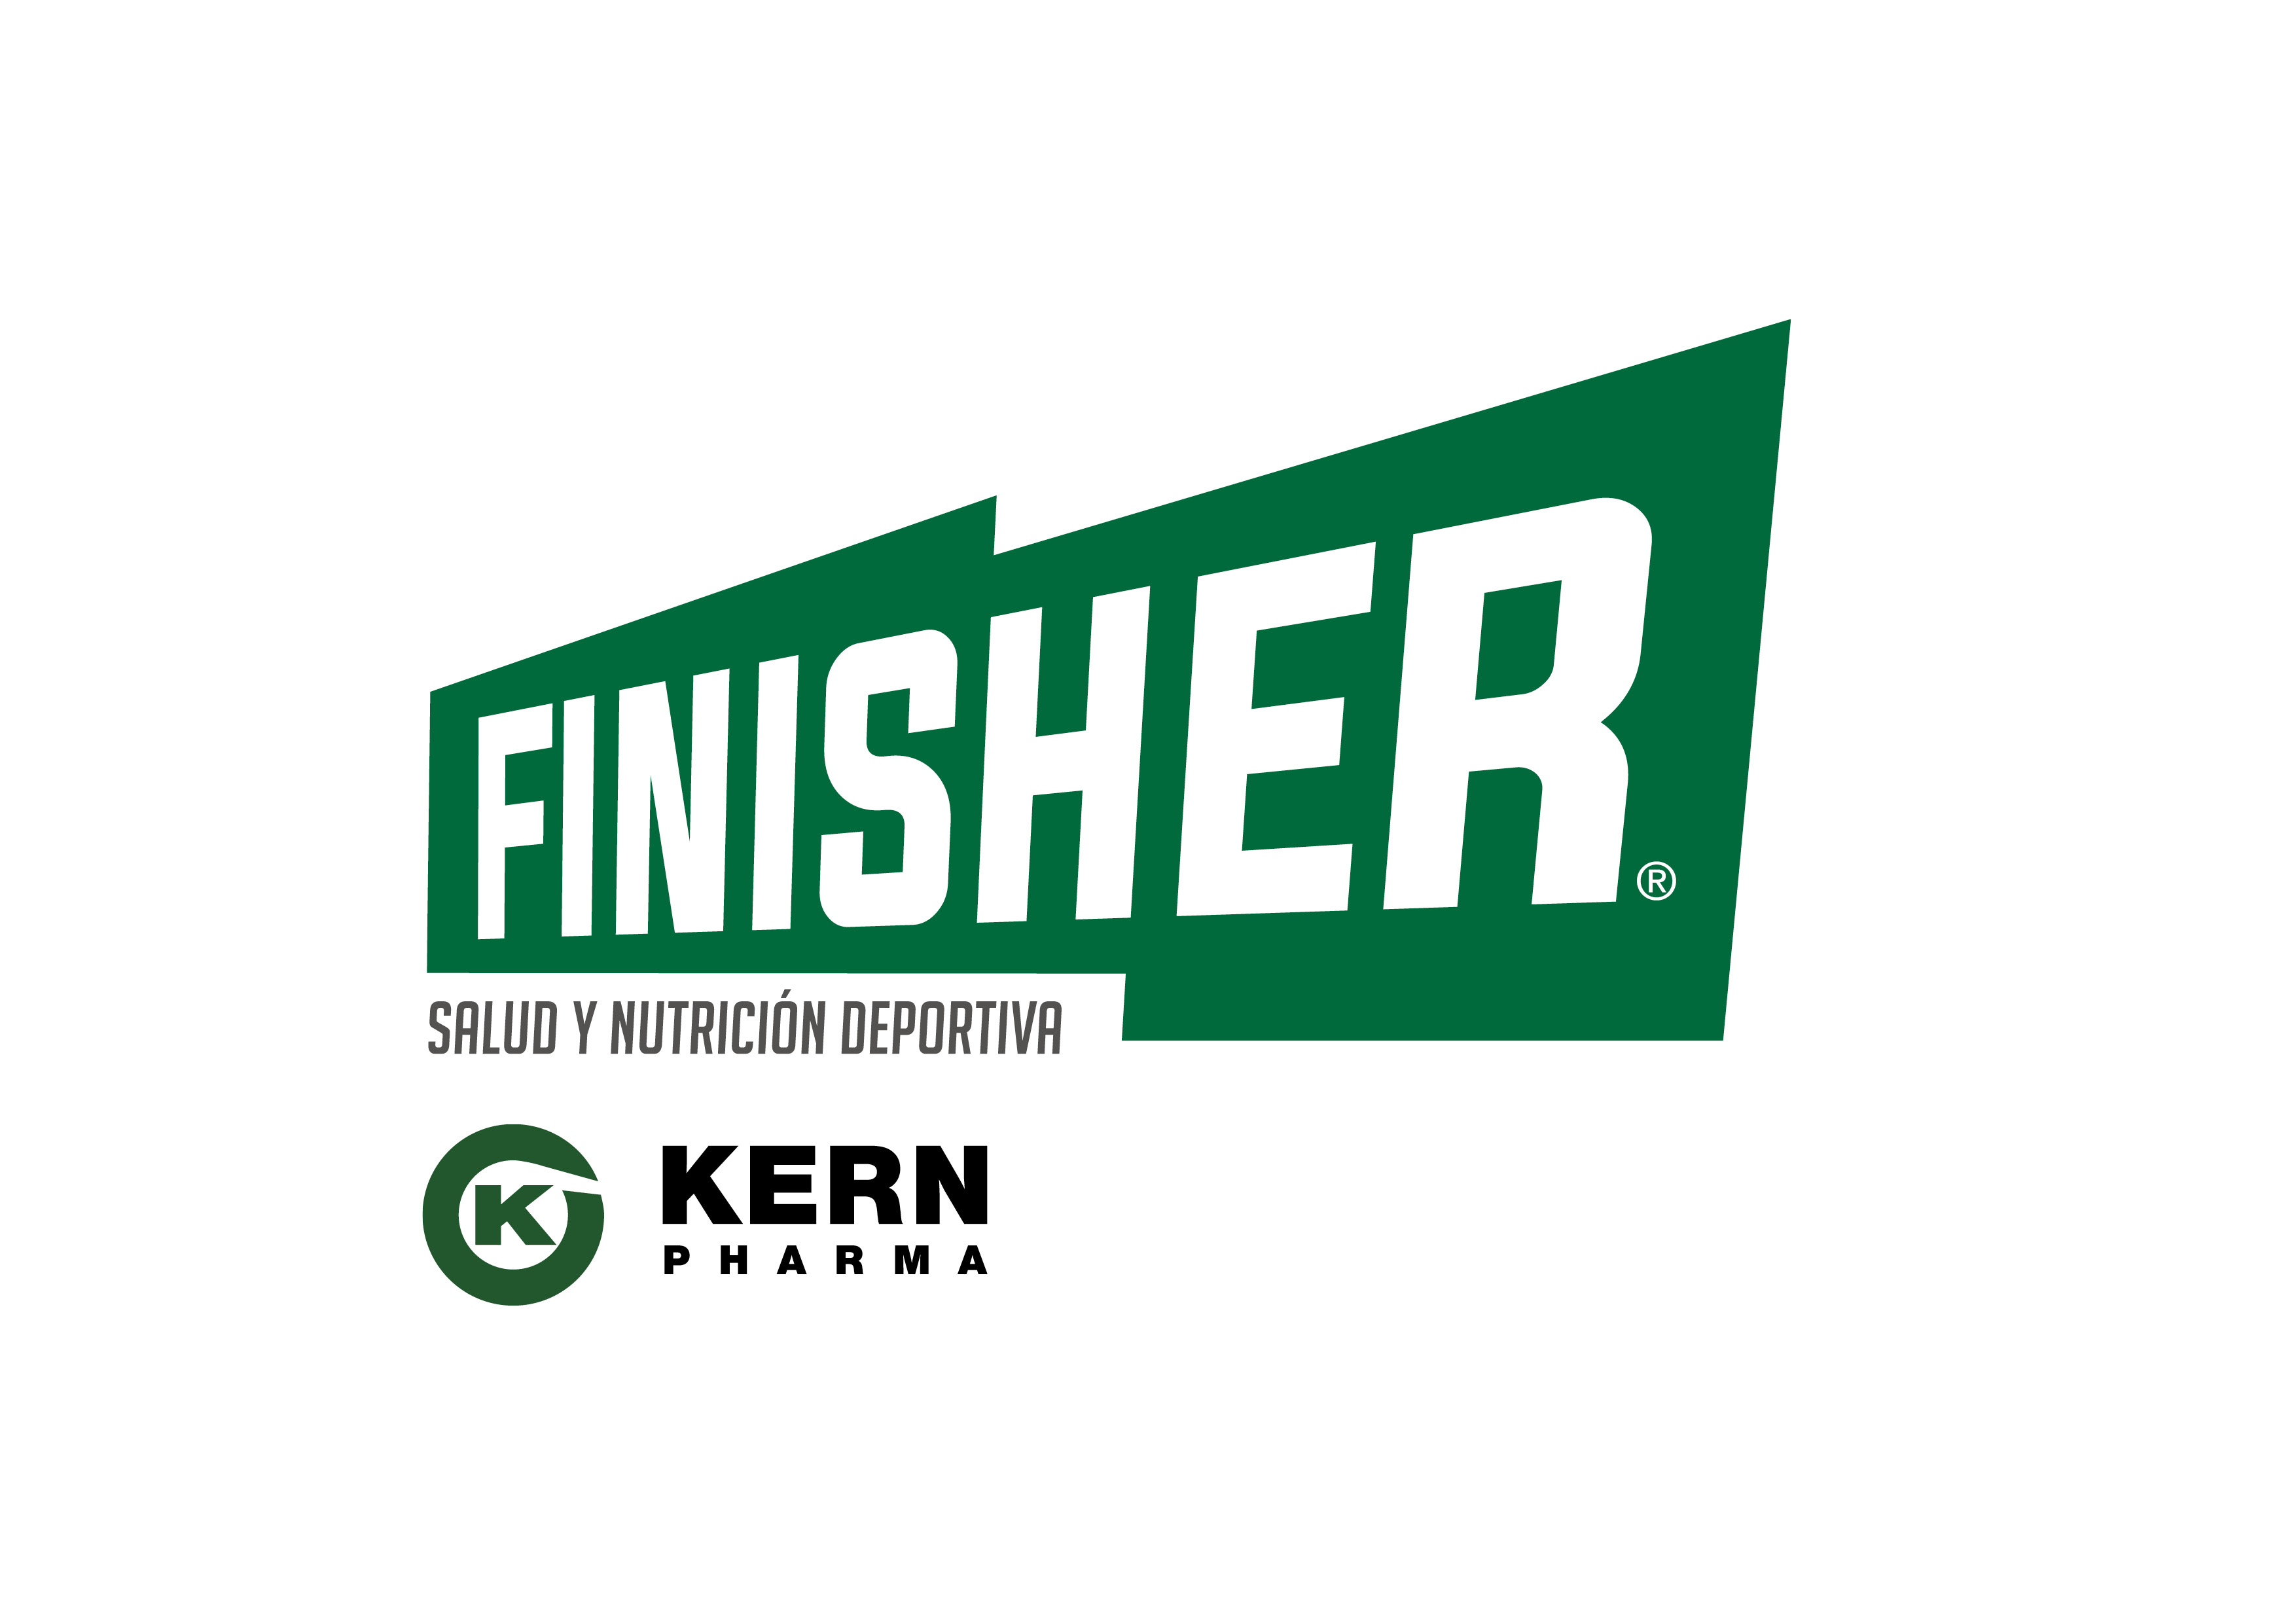 Finisher® de Kern Pharma, suplementación deportiva oficial de la 20ª